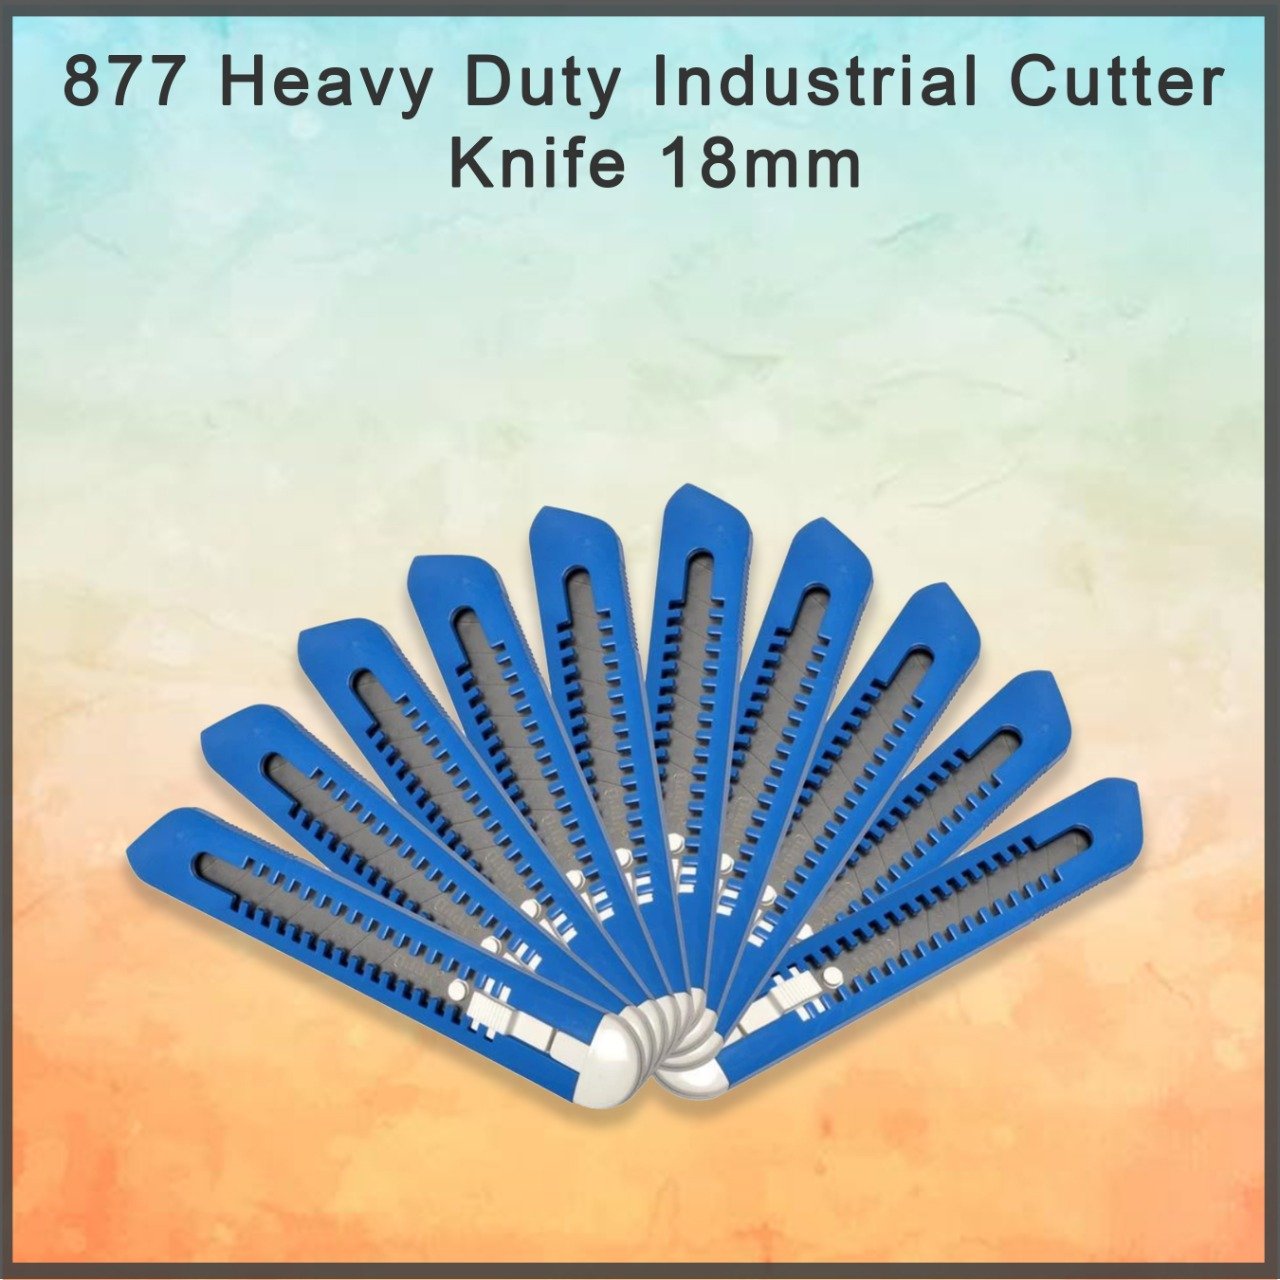 0877 Heavy Duty Industrial Cutter Knife 18mm - SkyShopy